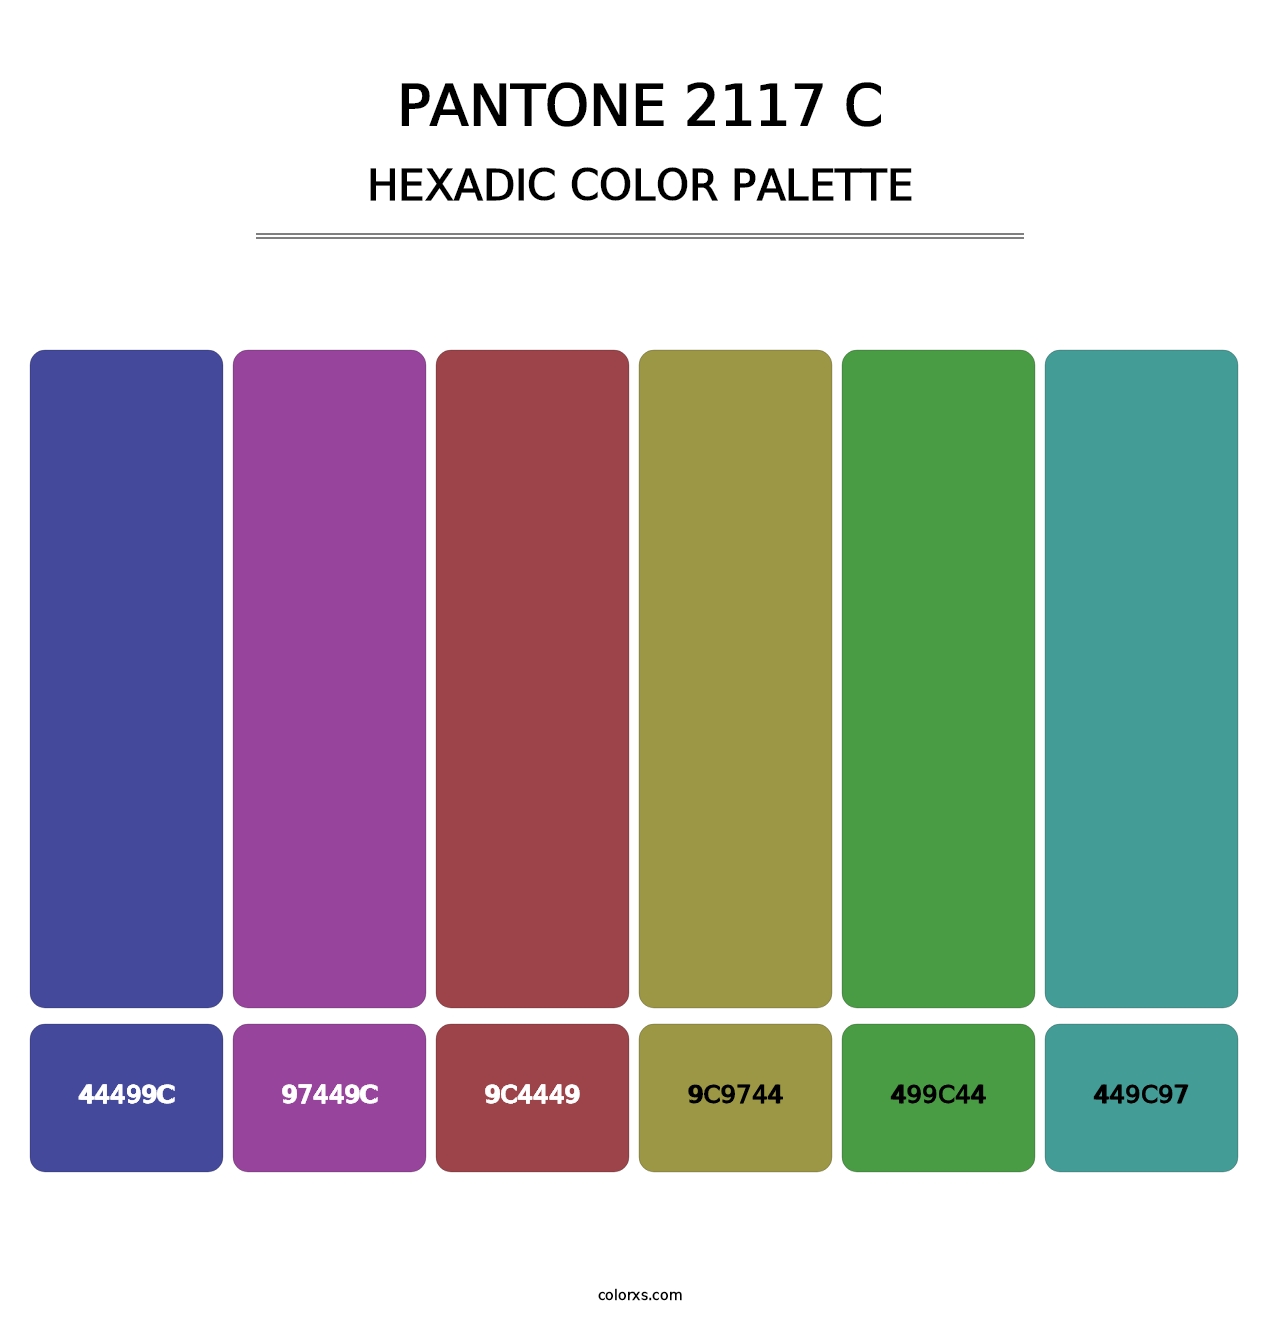 PANTONE 2117 C - Hexadic Color Palette